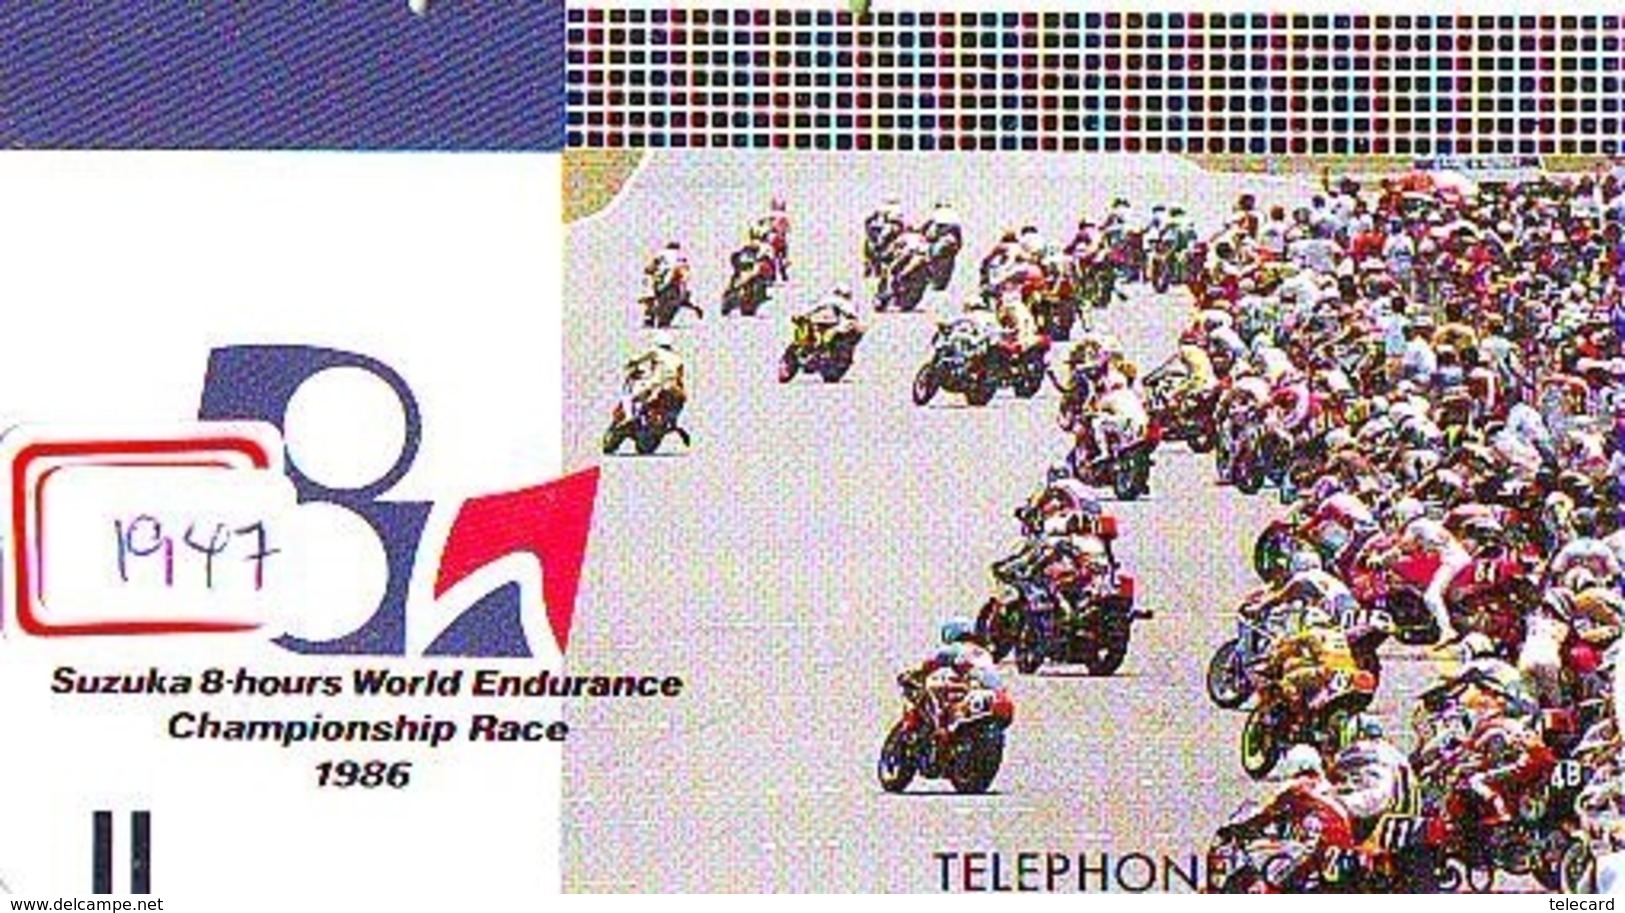 Télécarte Japon * FRONT BAR * 330-2228 * GRAND PRIX 1986 * SUZUKA 8-HOURS * MOTO  (1947) MOTORBIKE * PHONECARD JAPAN - Motorbikes